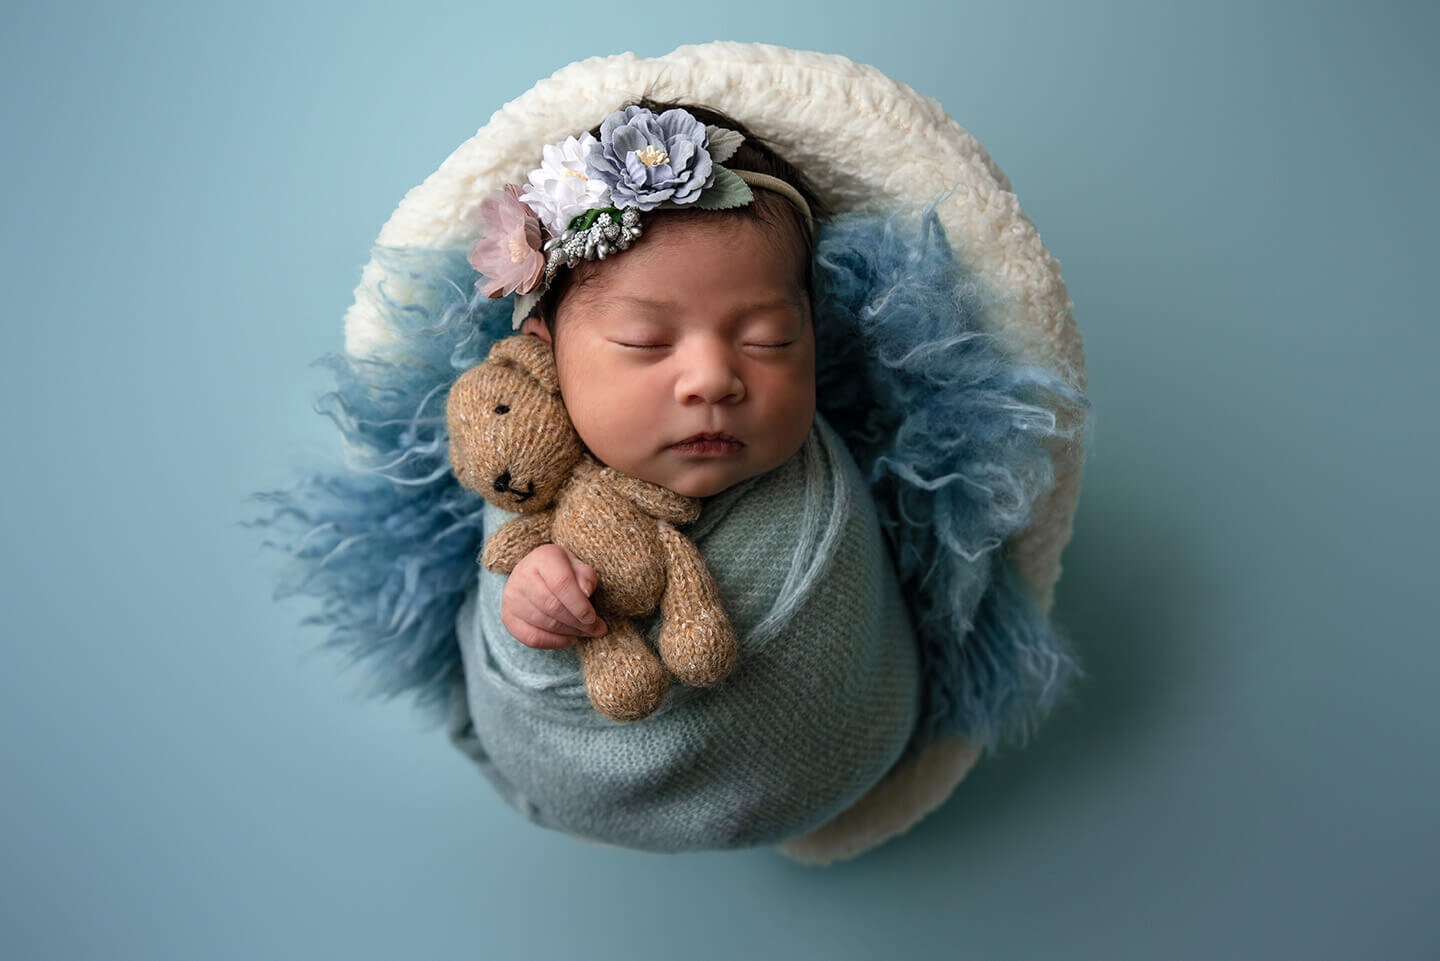 Newborn holding teddy bear